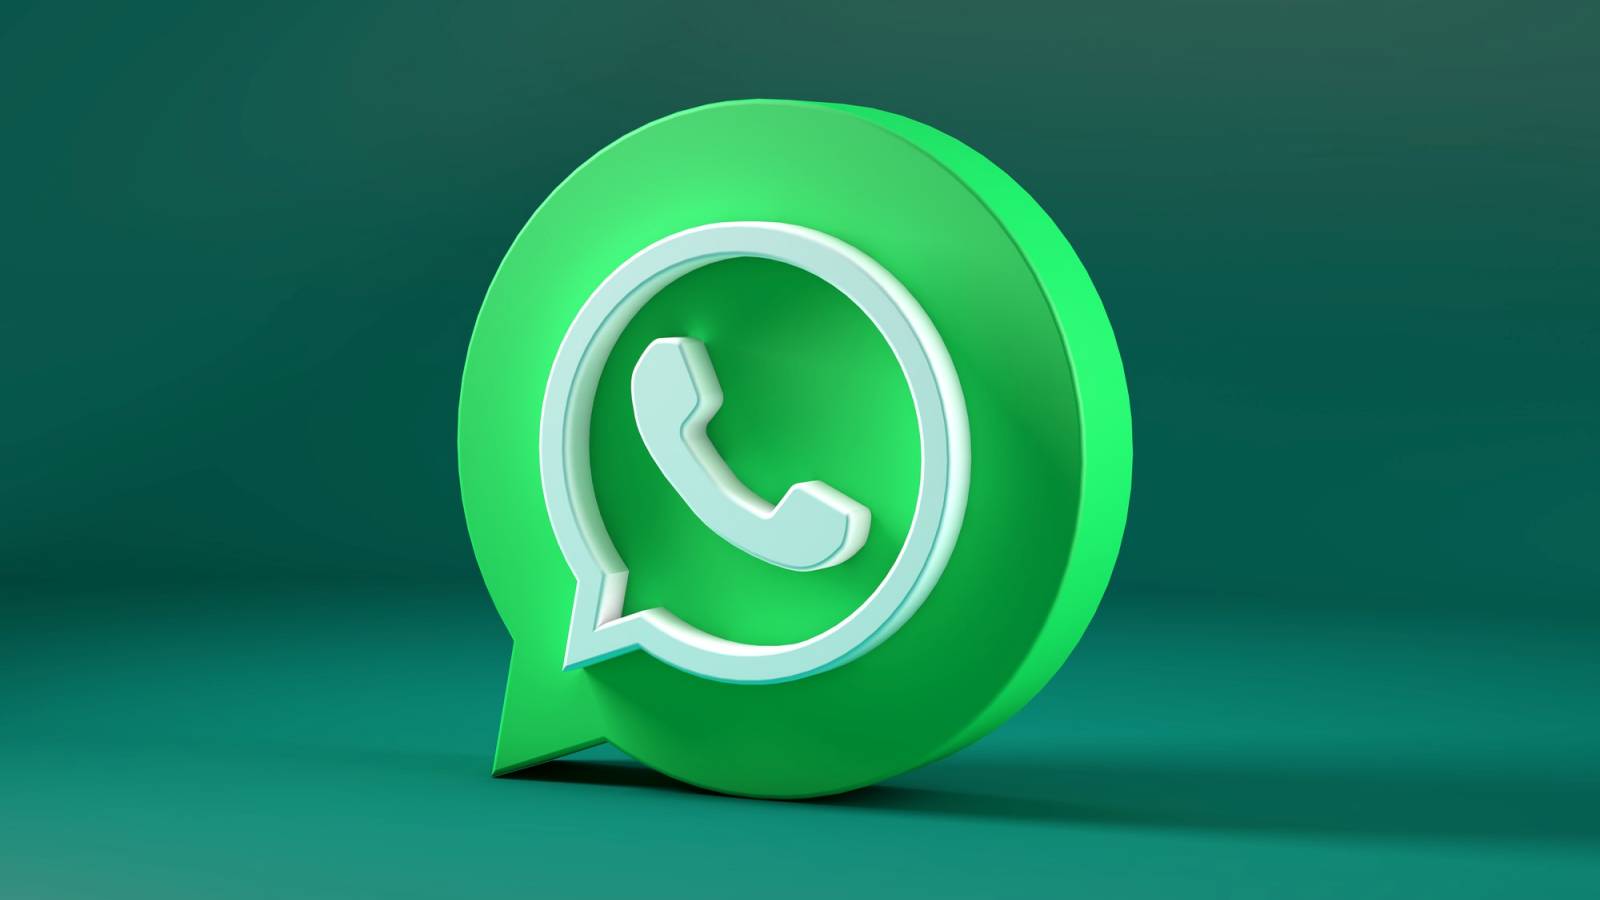 WhatsApp Deciziile IMPORTANTE Confirmate Oficial iPhone Android